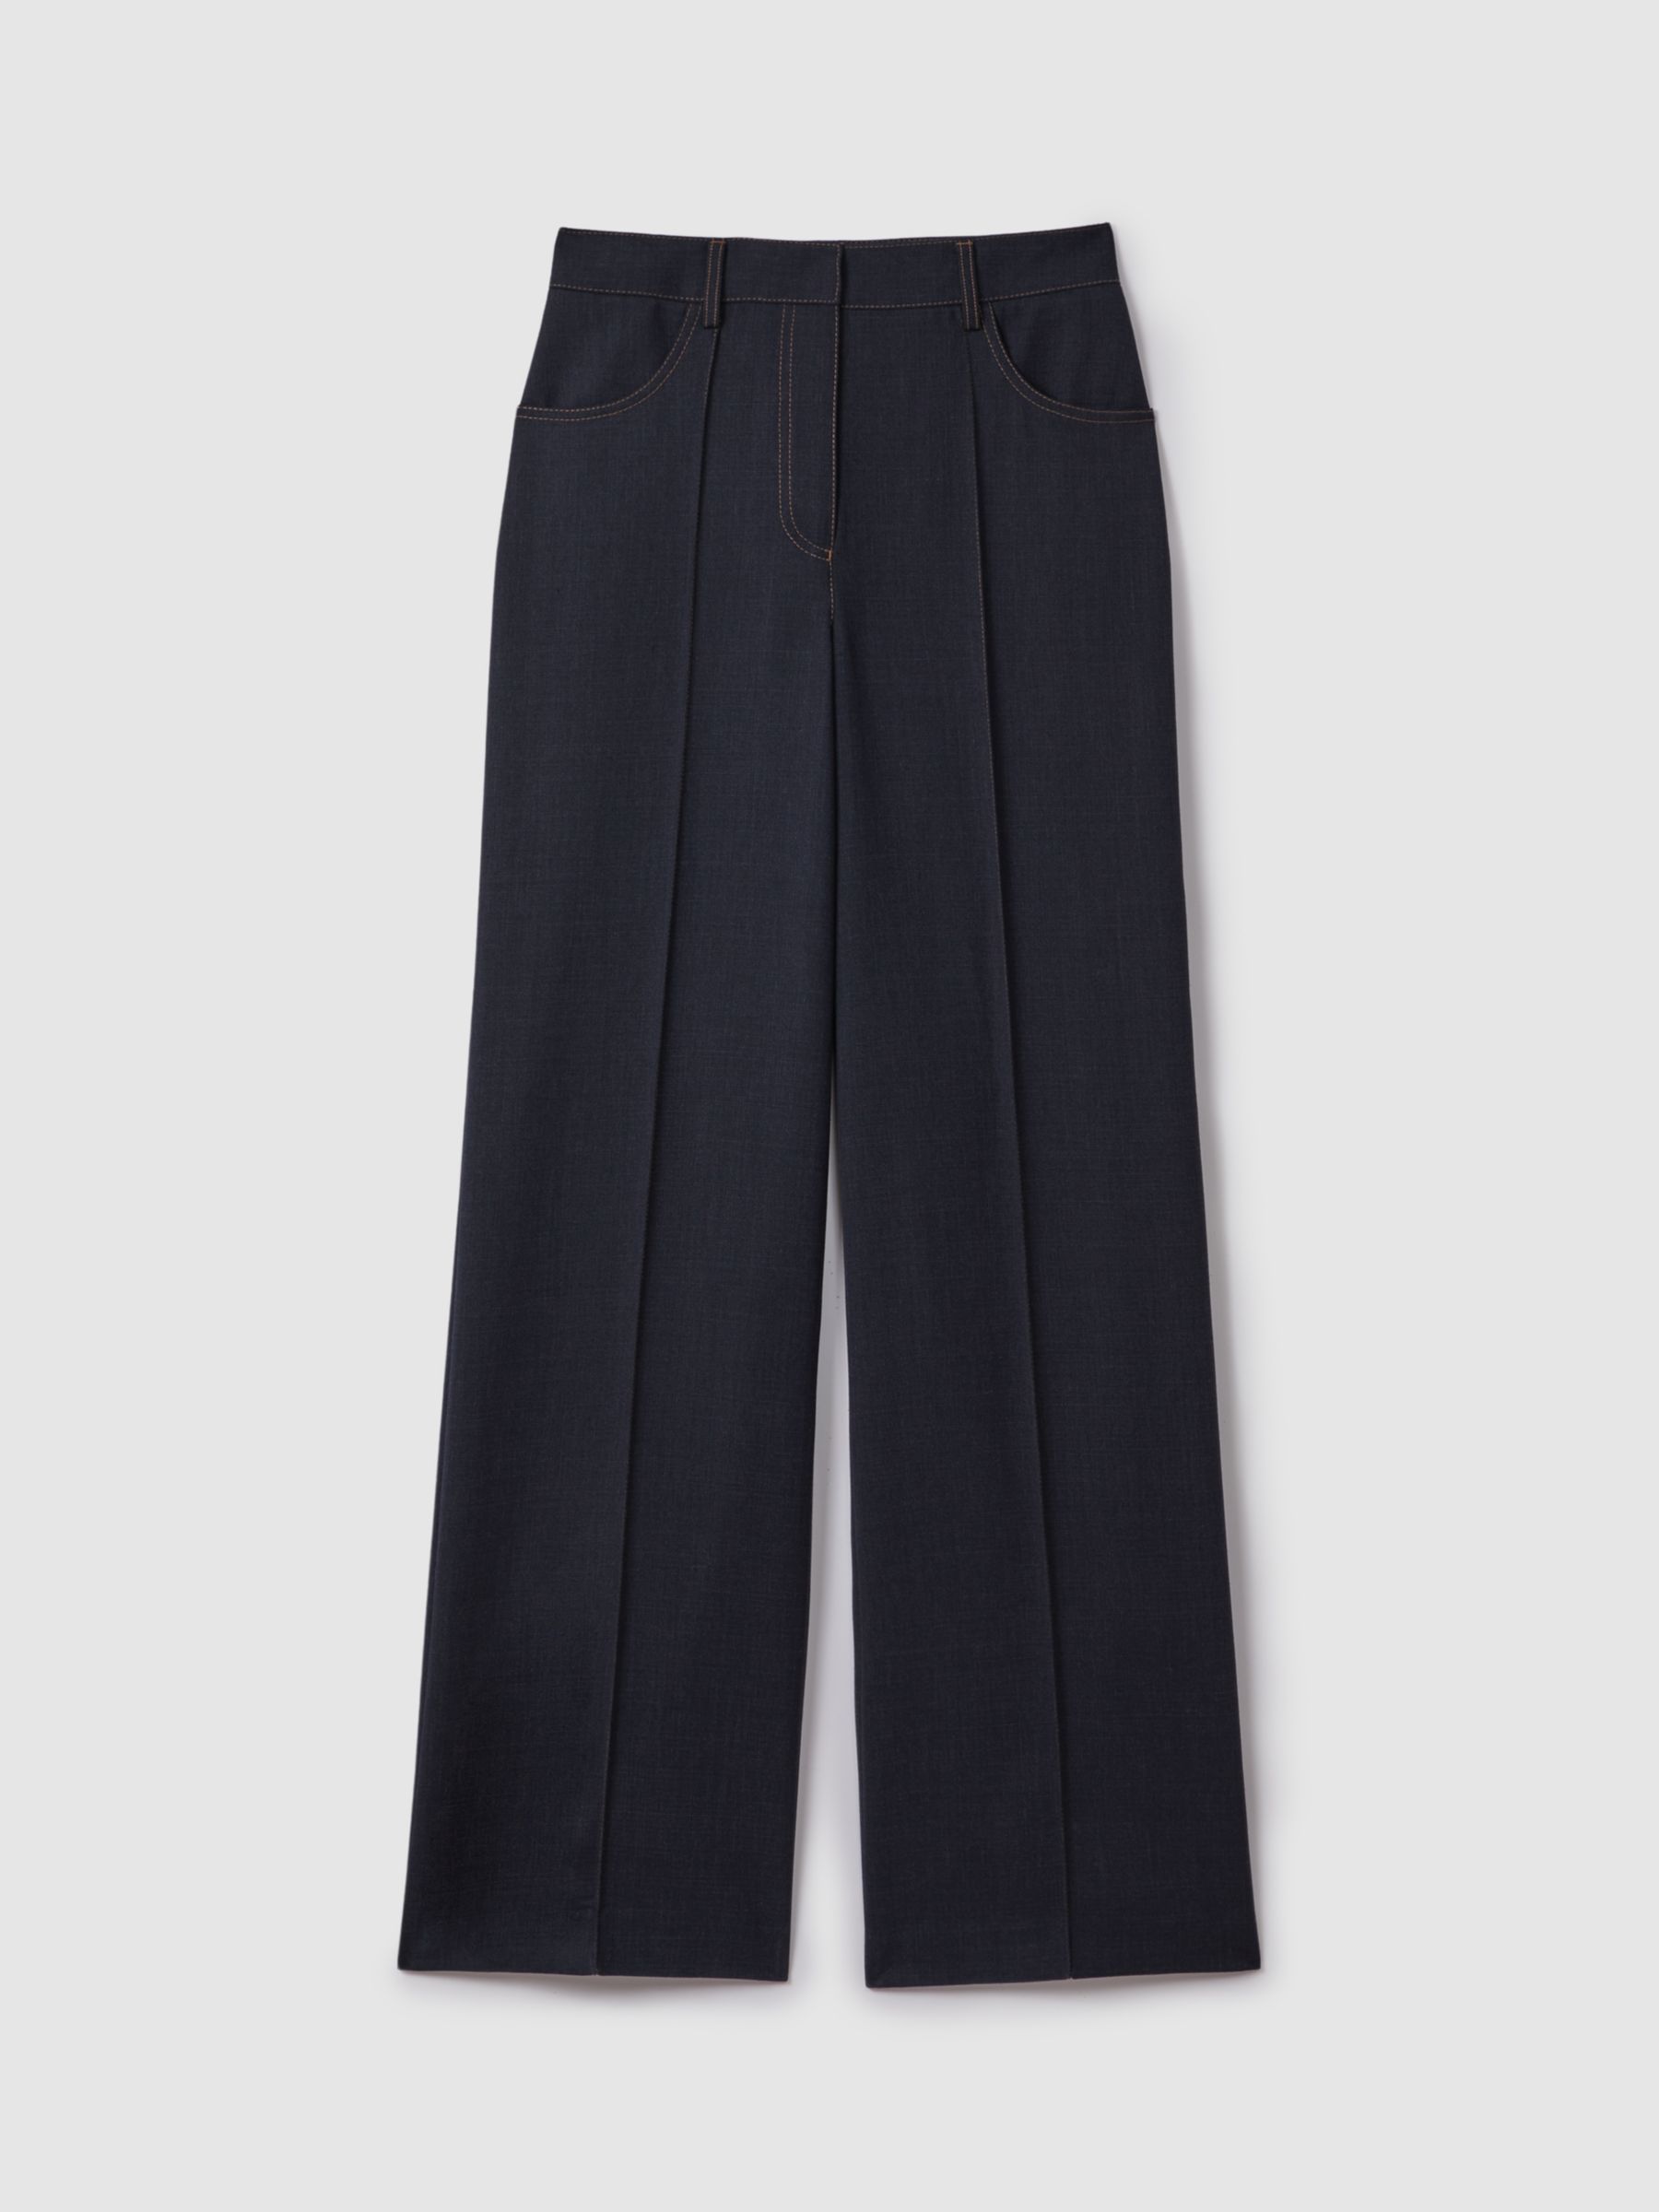 Buy Reiss Raven Wool Blend Denim Look Tailored Trousers, Navy Online at johnlewis.com